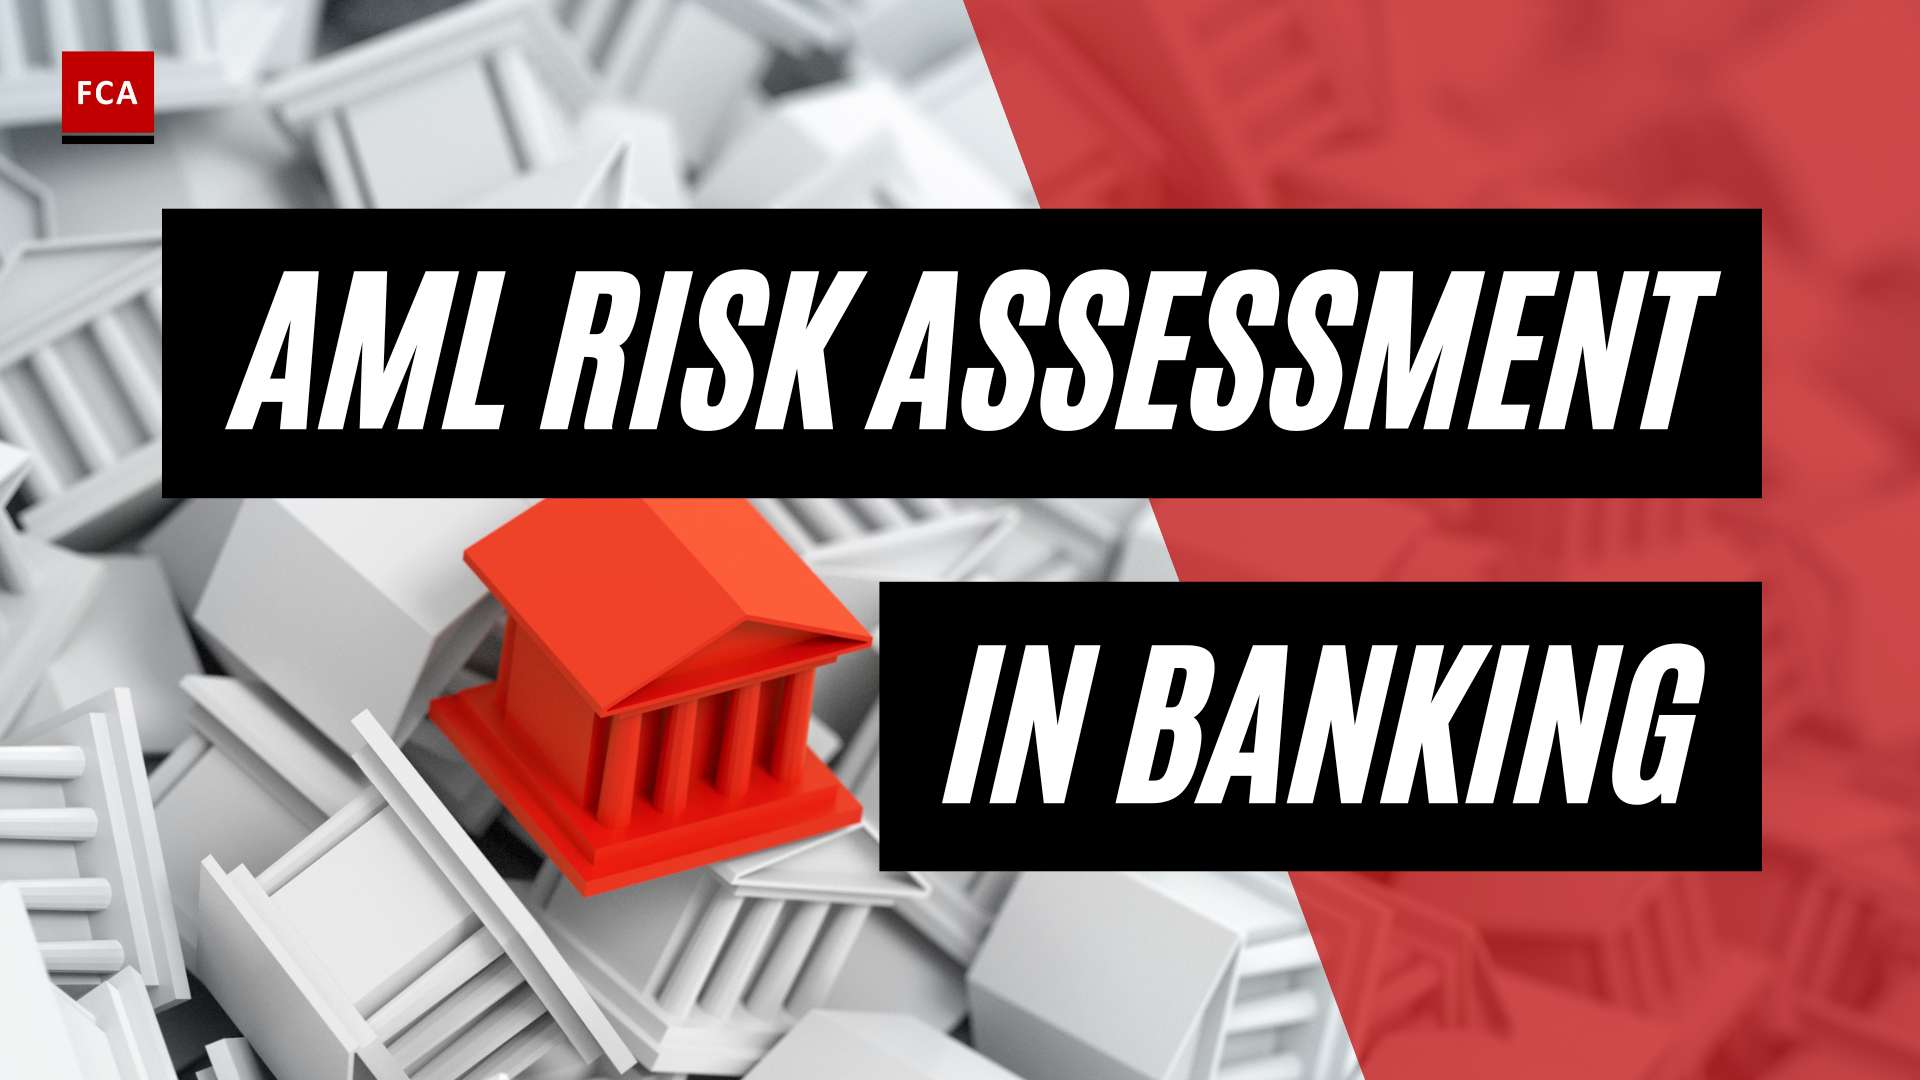 Safeguarding Against Financial Crime: Aml Risk Assessment In Banking